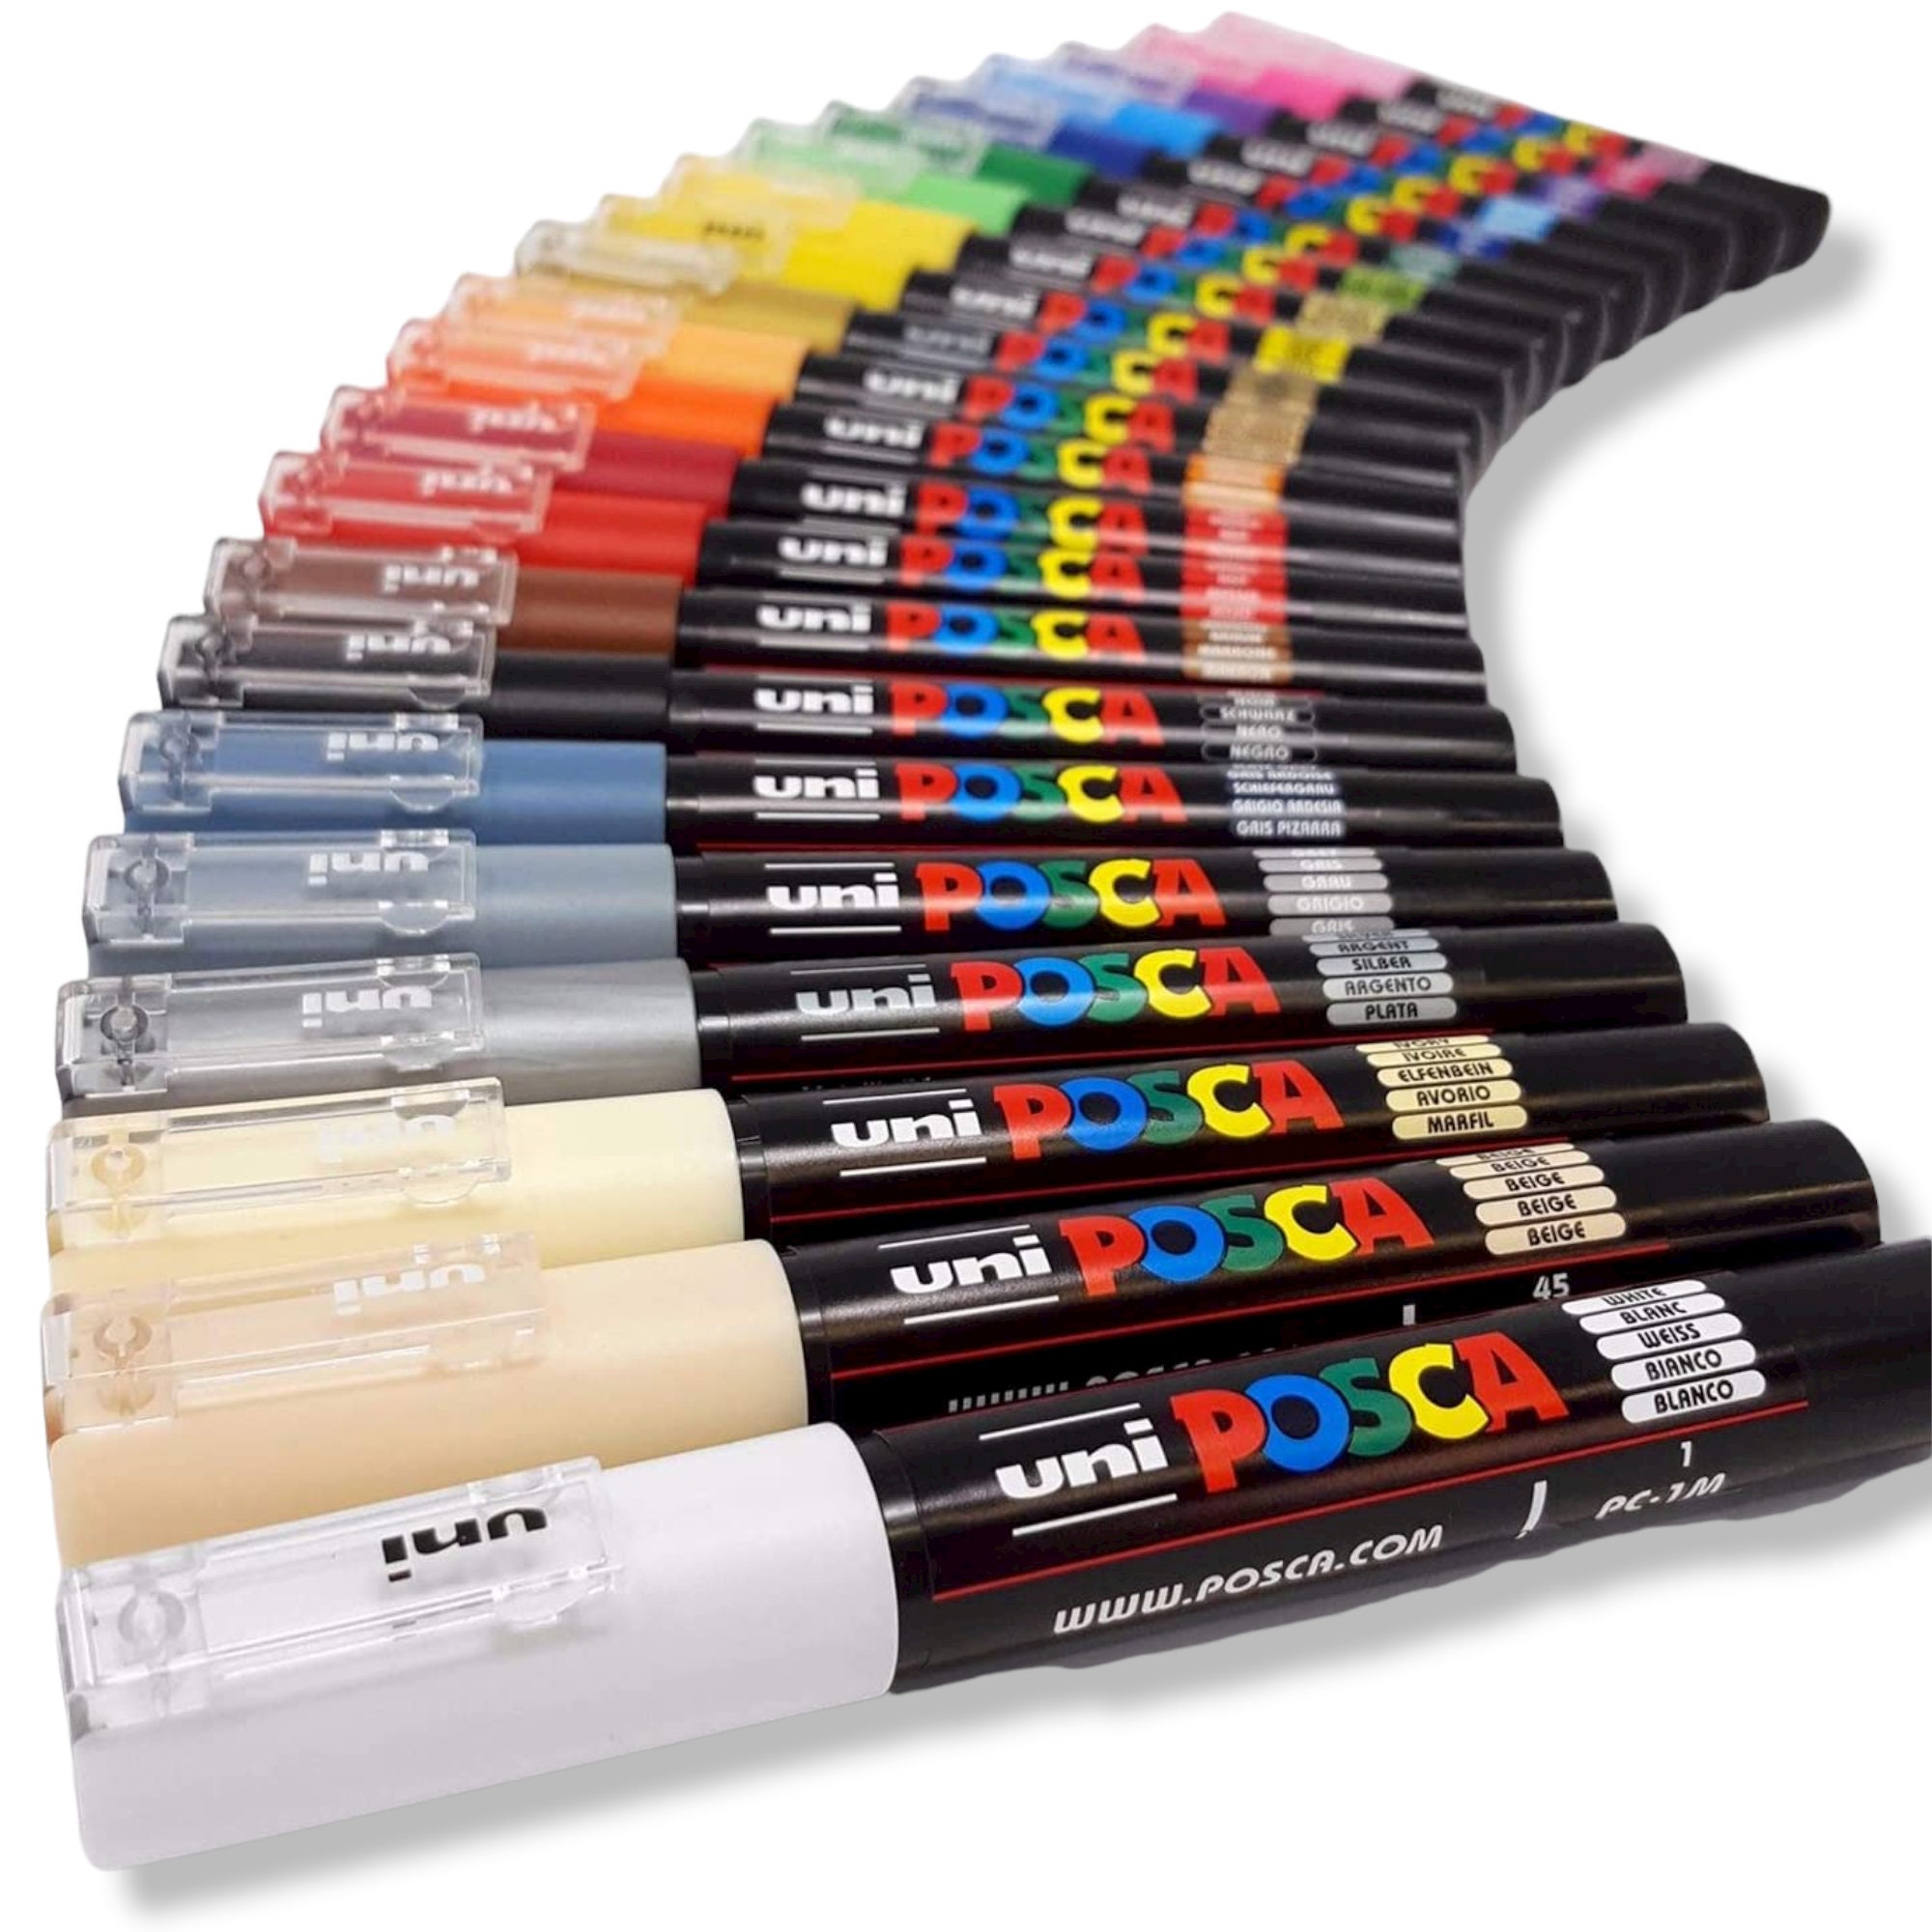 Posca PC-1M Paint Marker Art Pen - Professional 12 Pen Set - Extra Black +  White